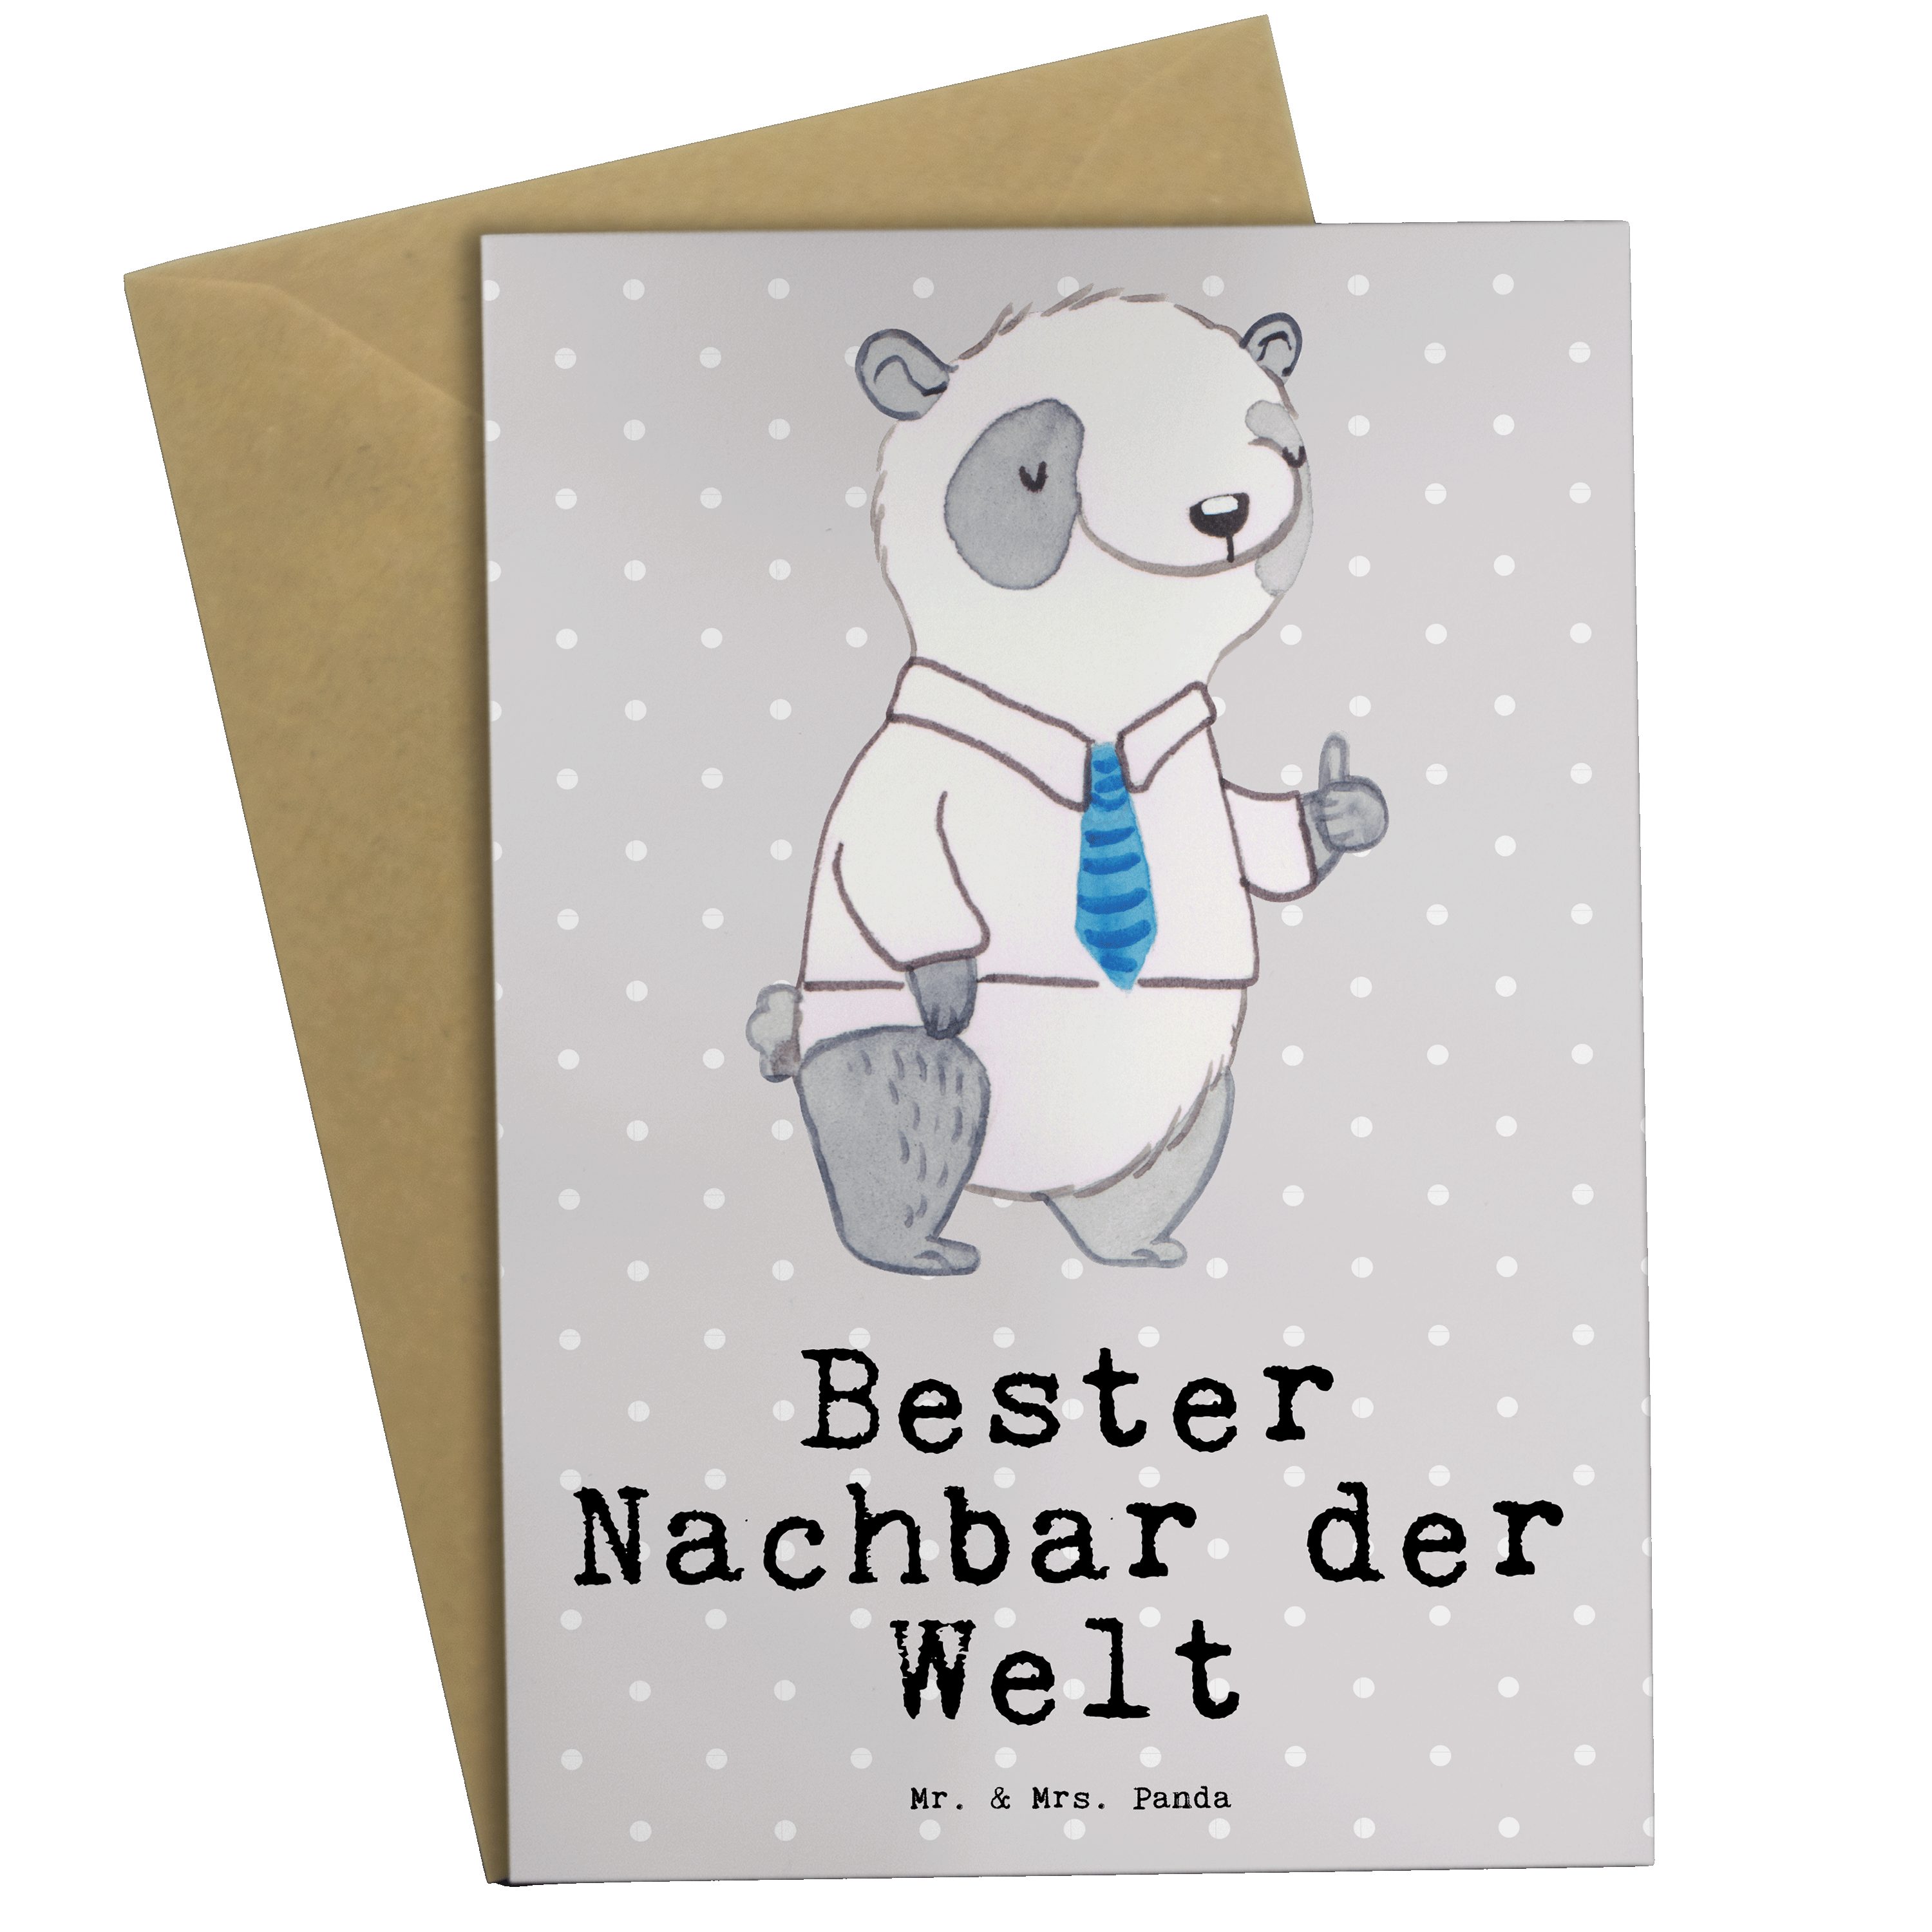 Mr. & Mrs. Panda Grußkarte Panda Bester Nachbar der Welt - Grau Pastell - Geschenk, Geburtstagsg